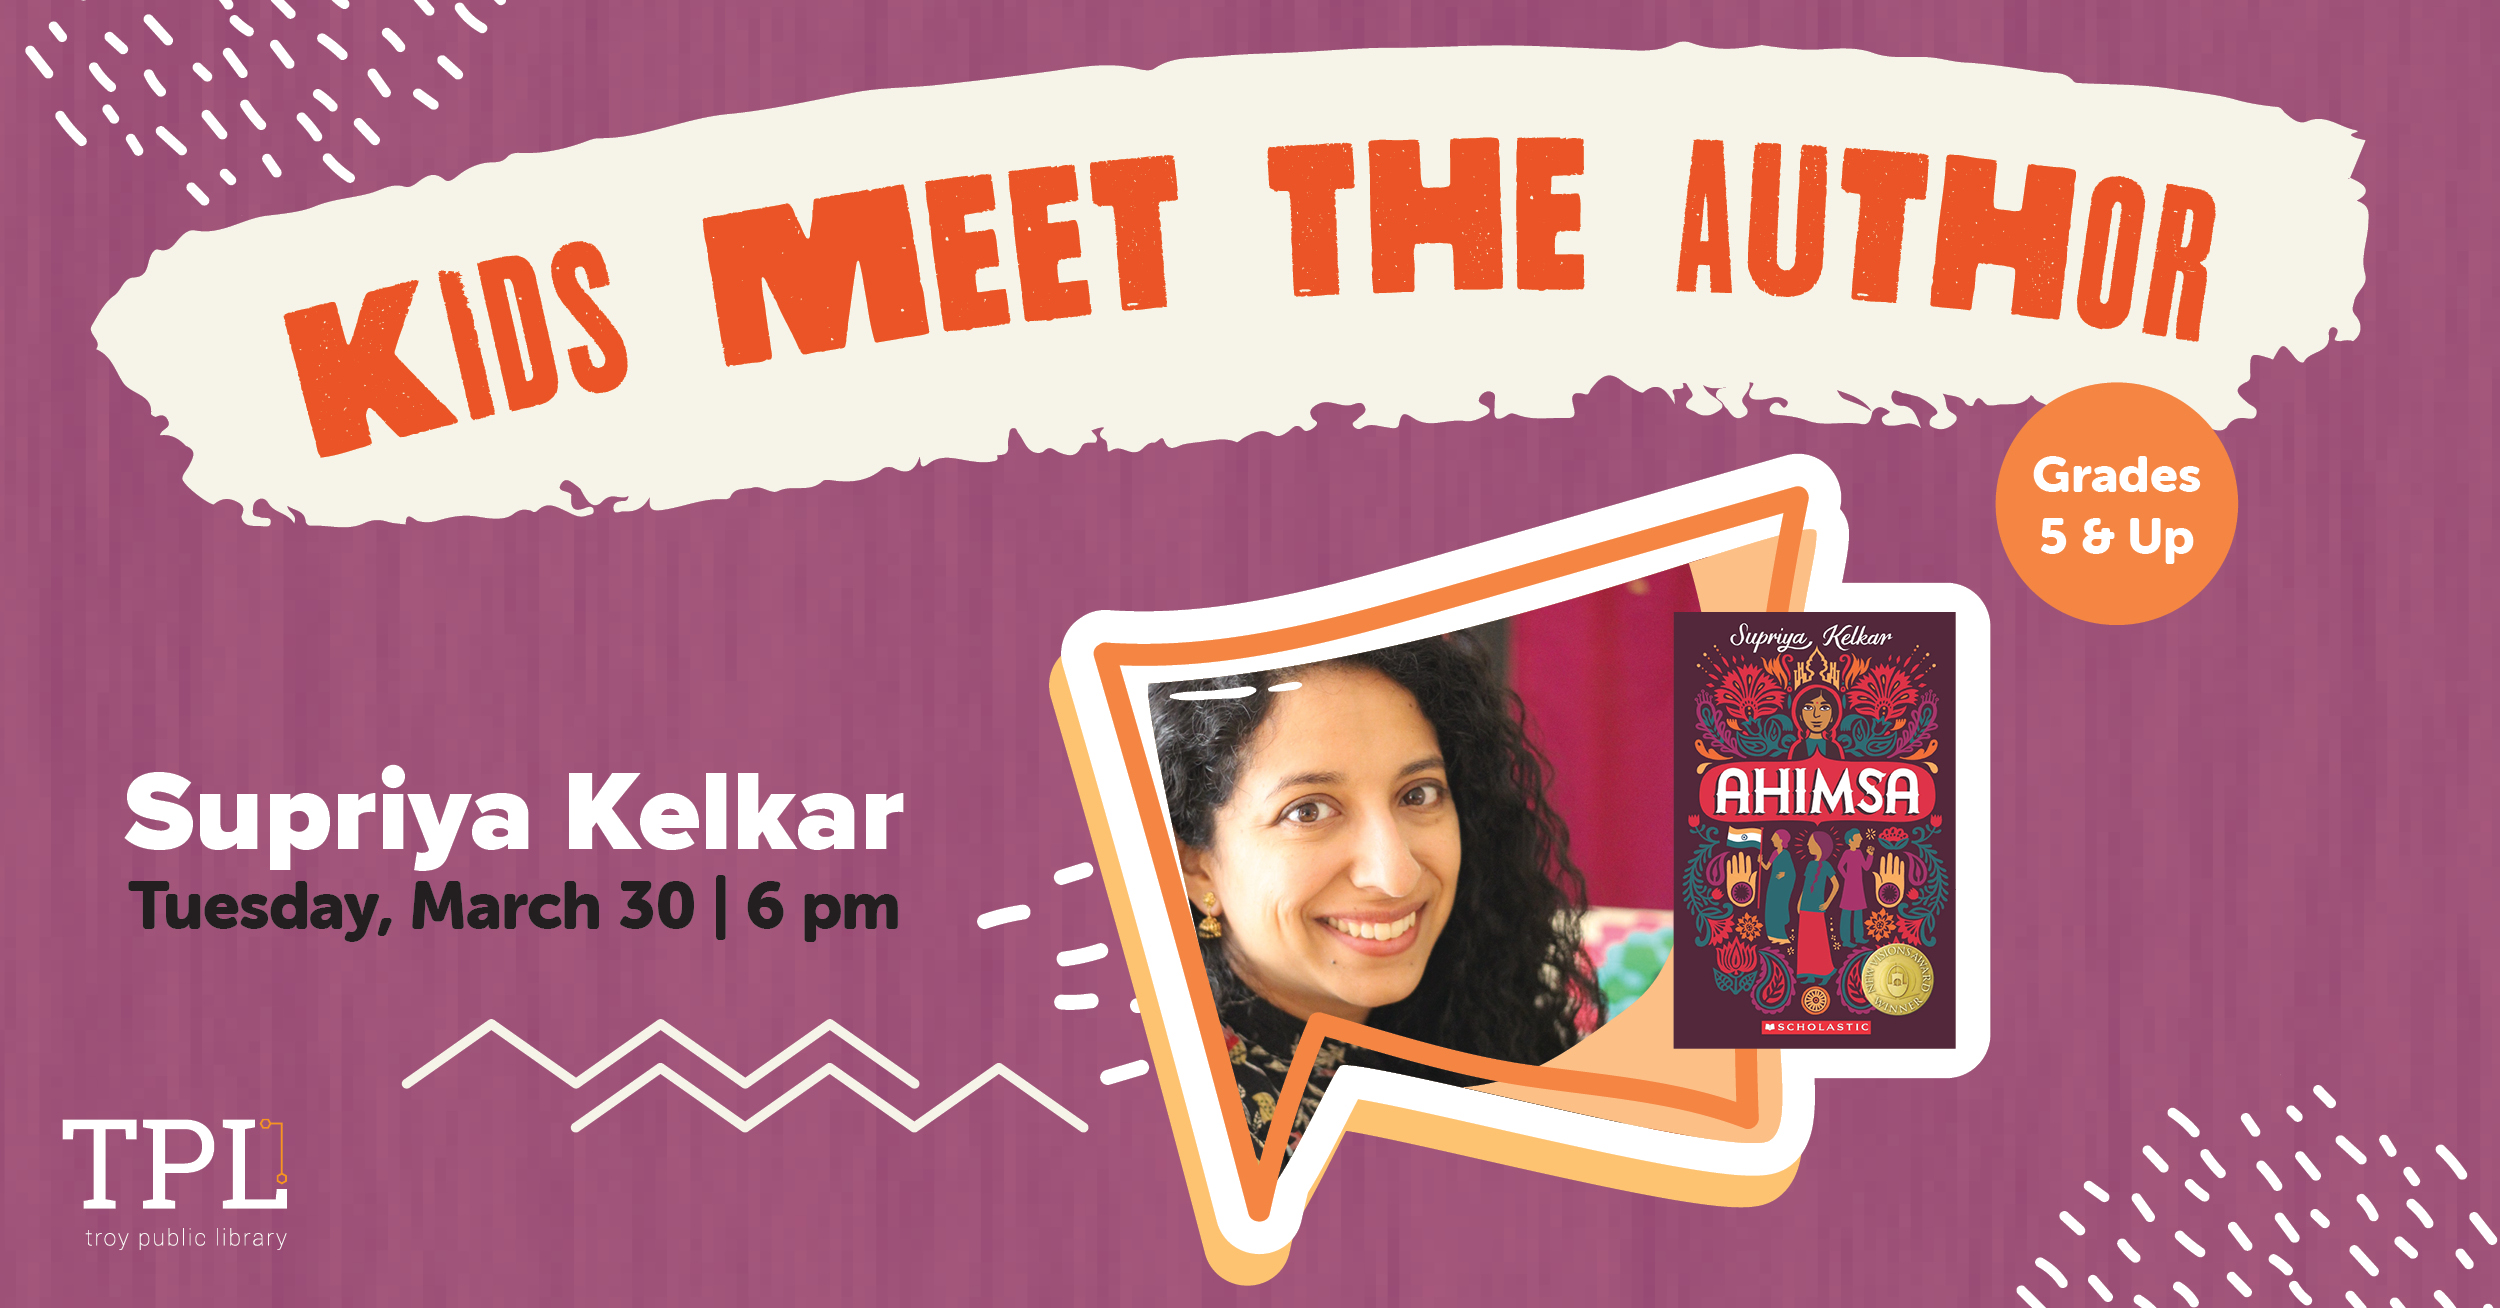 KIds Meet the Author. Supriya Kelkar Tuesday, March 30 at 6pm. Grades 5 and up